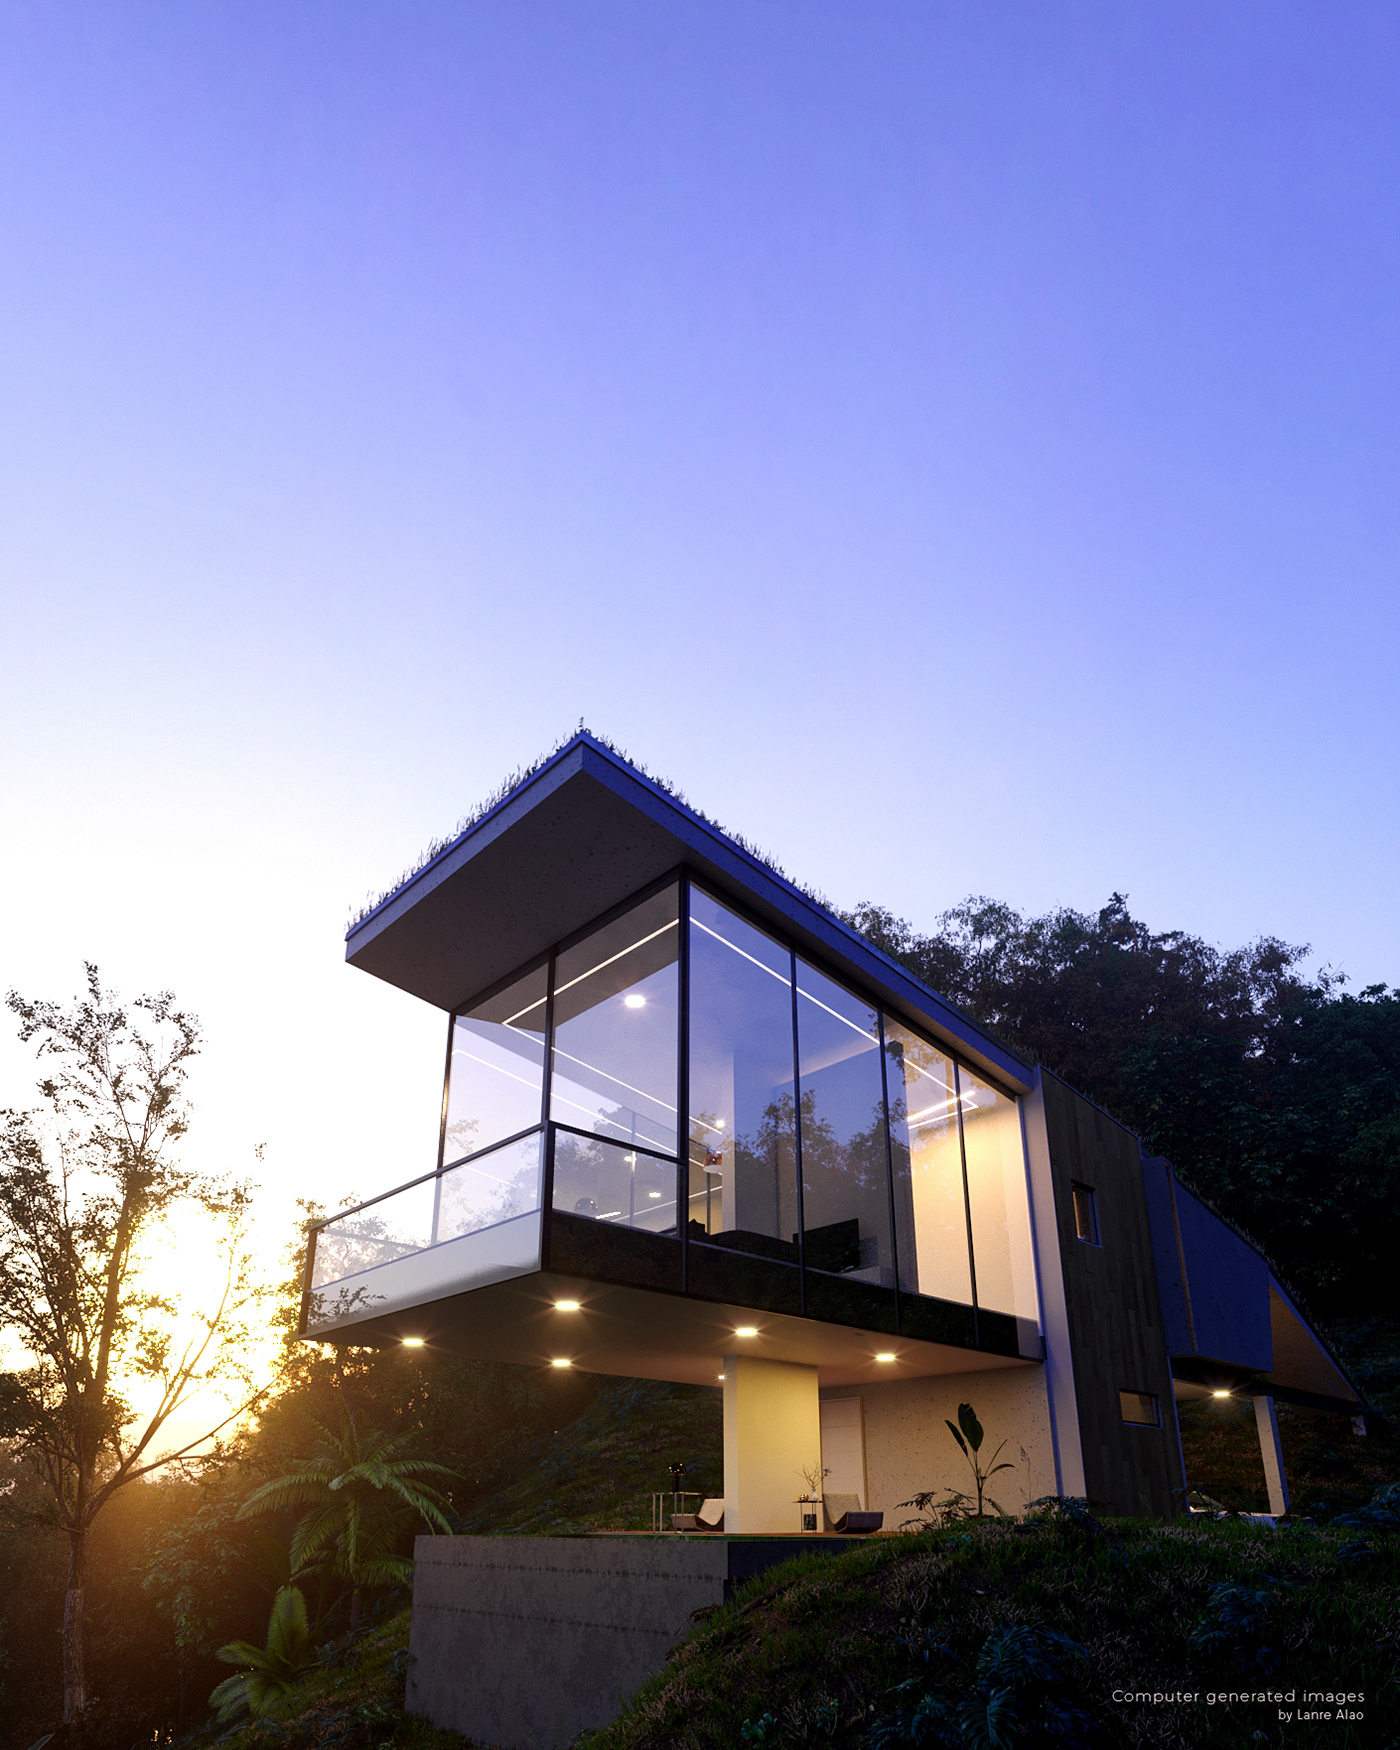 corona 3dsmax architecture house design CGI Render photoshop exterior visualization